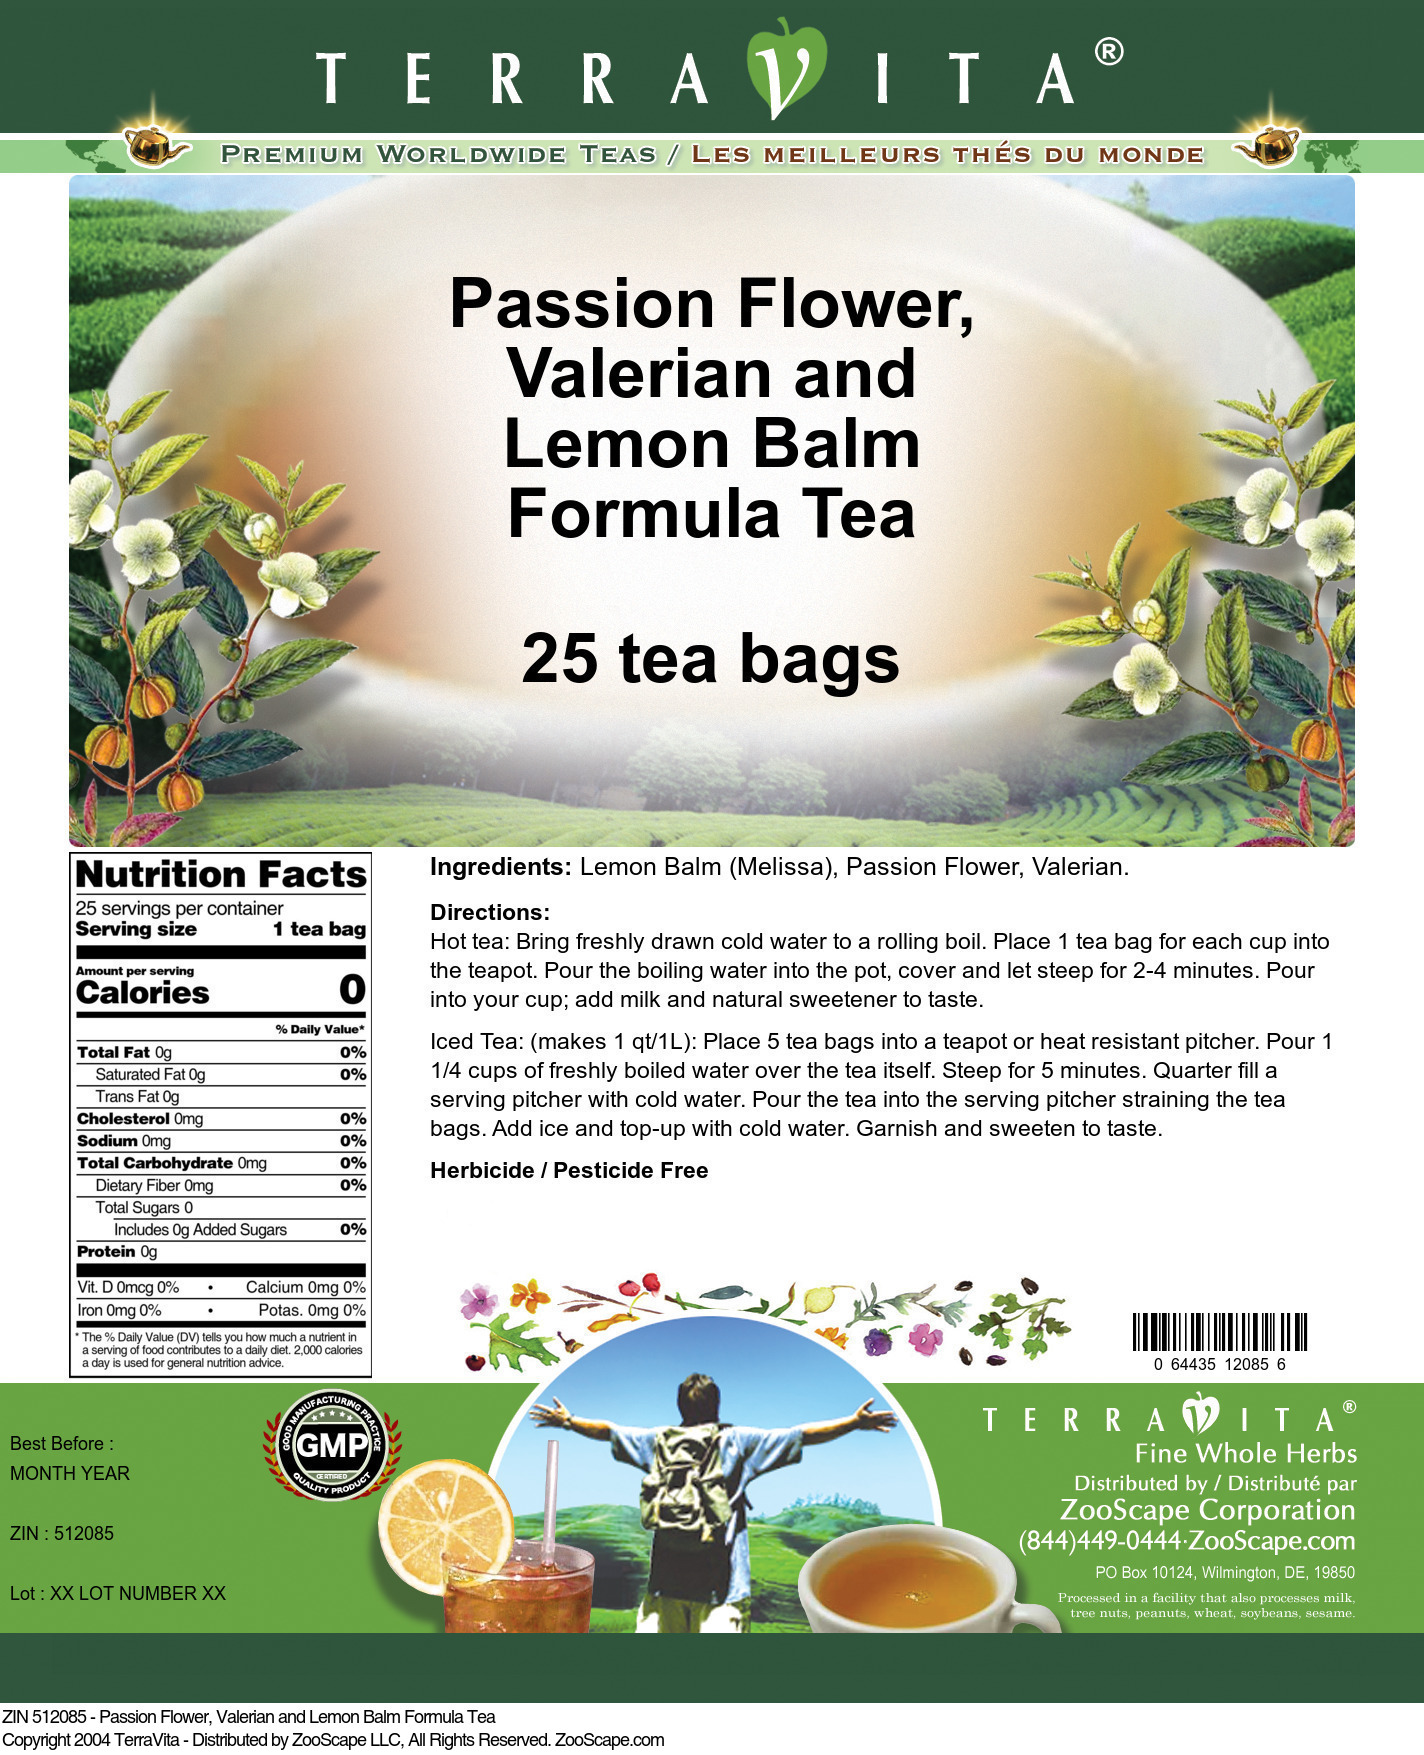 Passion Flower, Valerian and Lemon Balm Formula Tea - Label